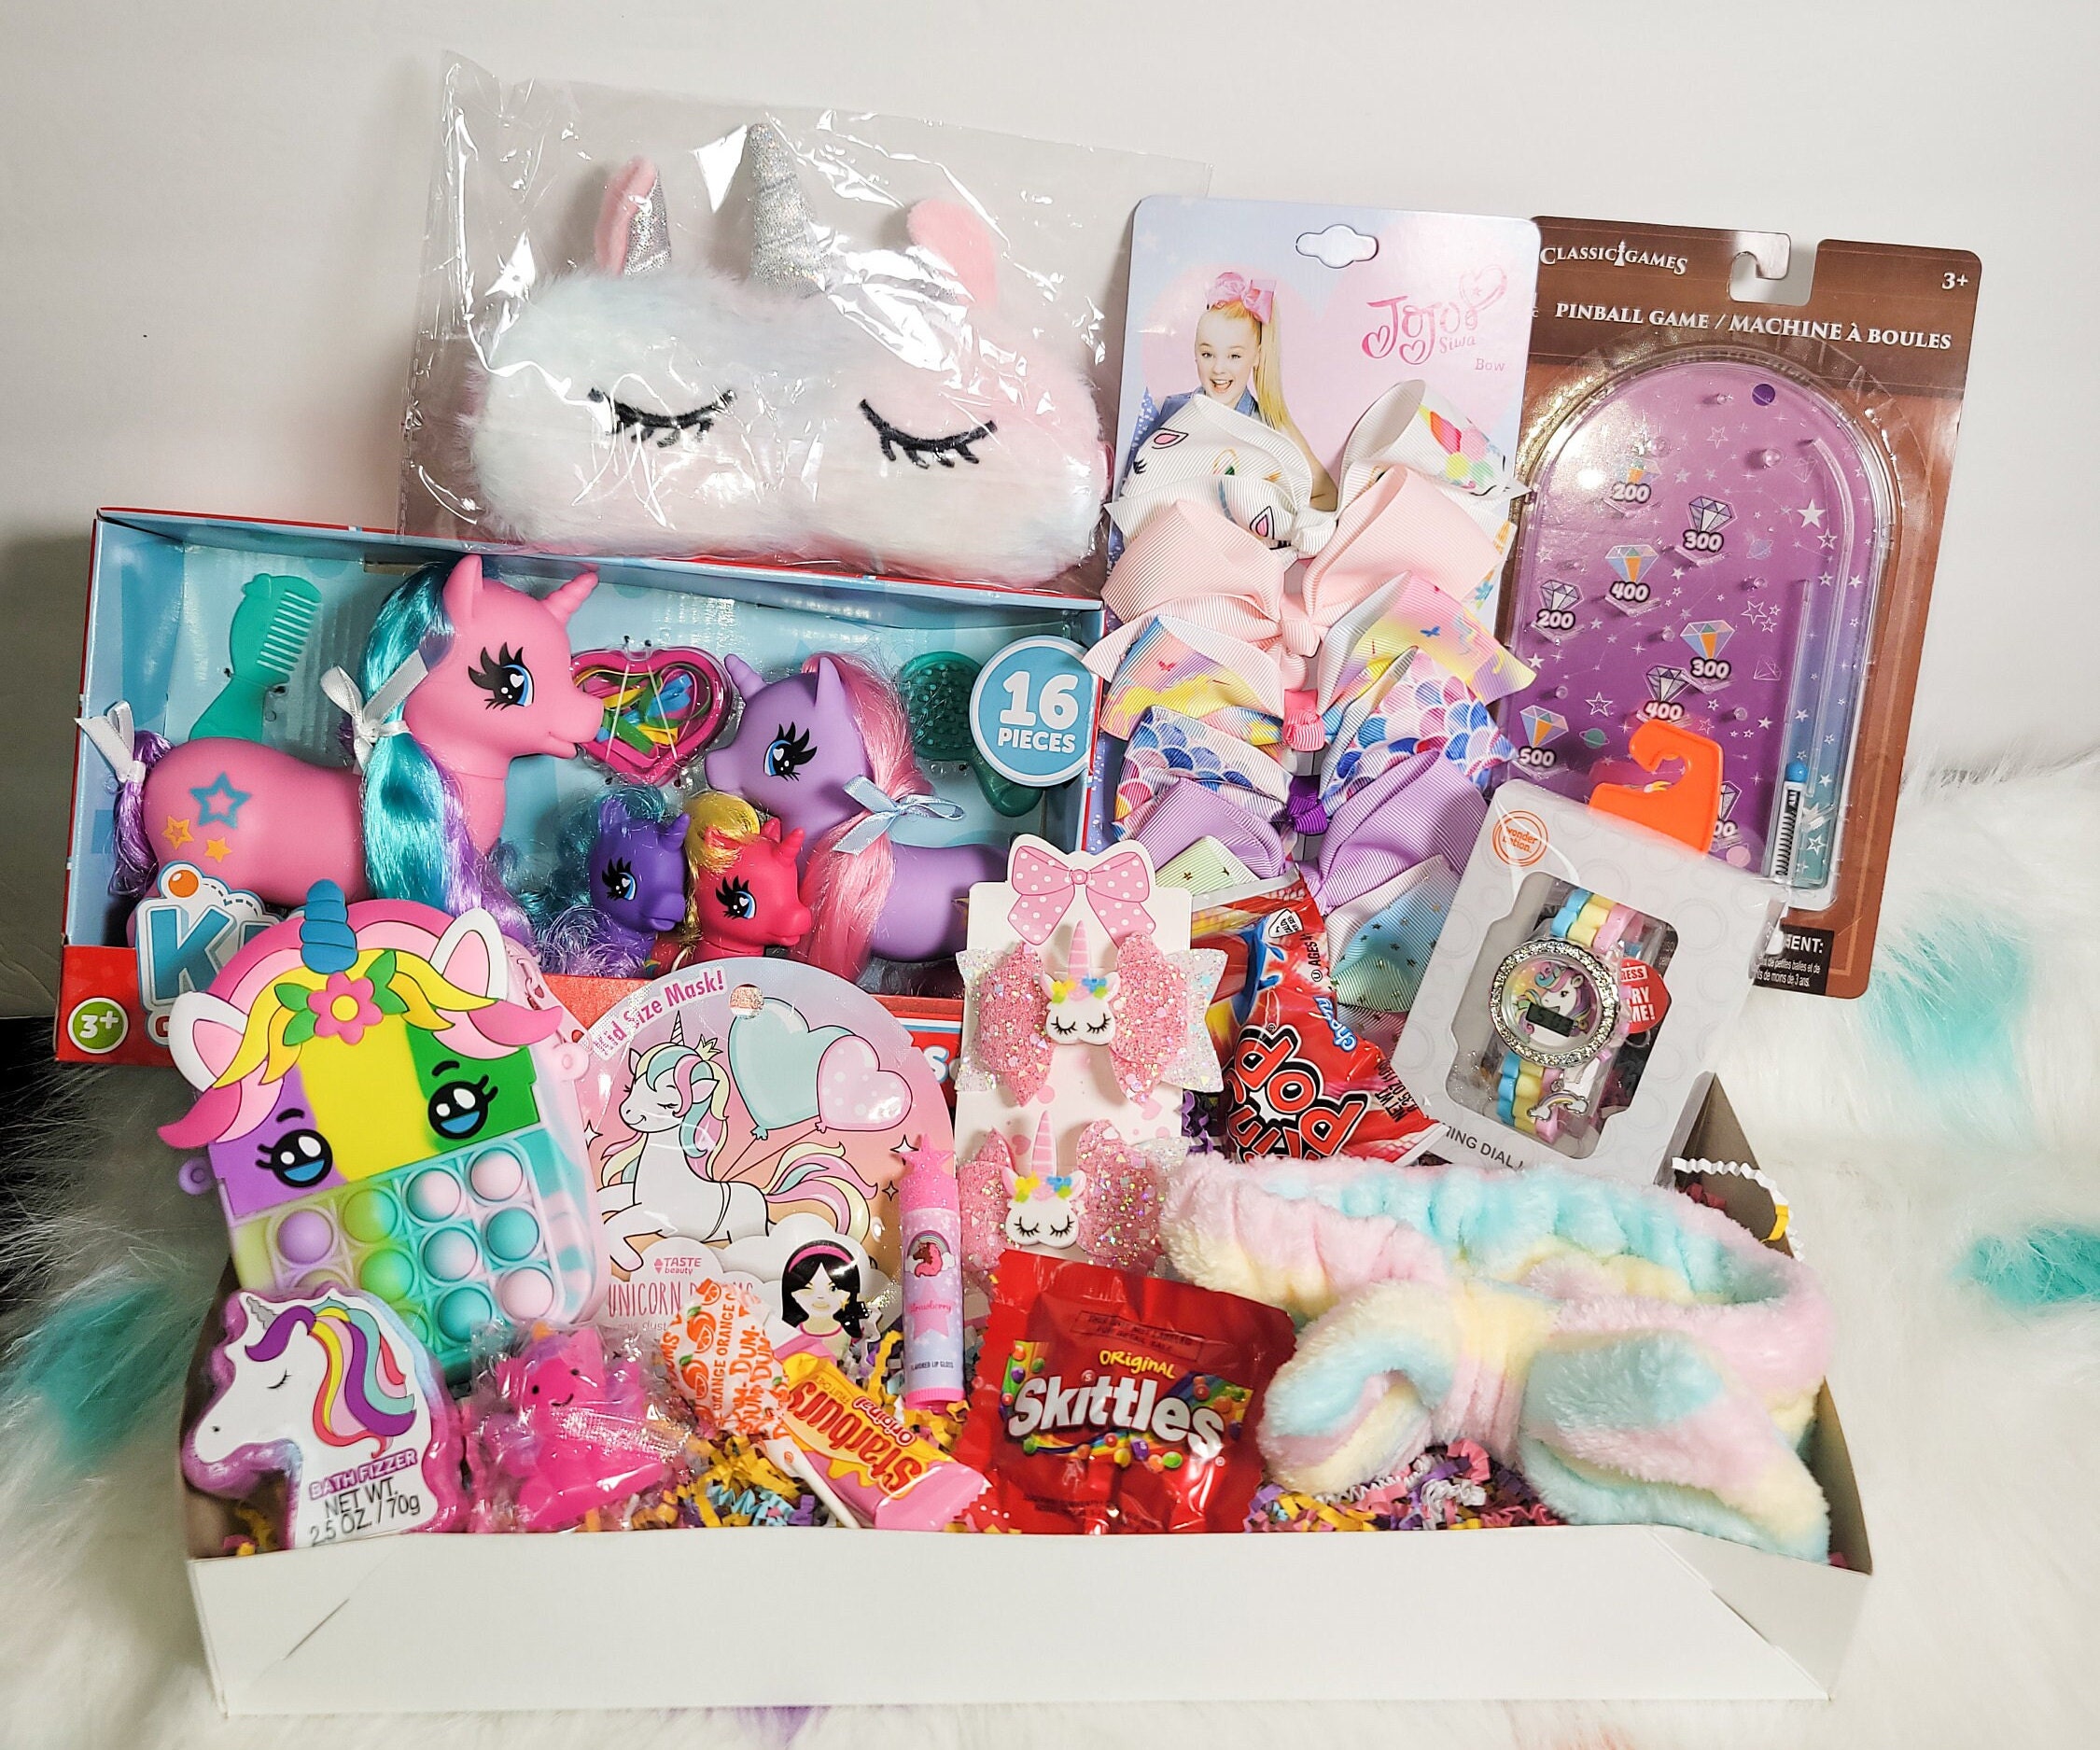 Pink Unicorn Girls Gift, Birthday Gift for Girls, Christmas Gift for Girls,  Tween Girl Gift, Self Care Girls Gift, Nails, Sleep Mask. 